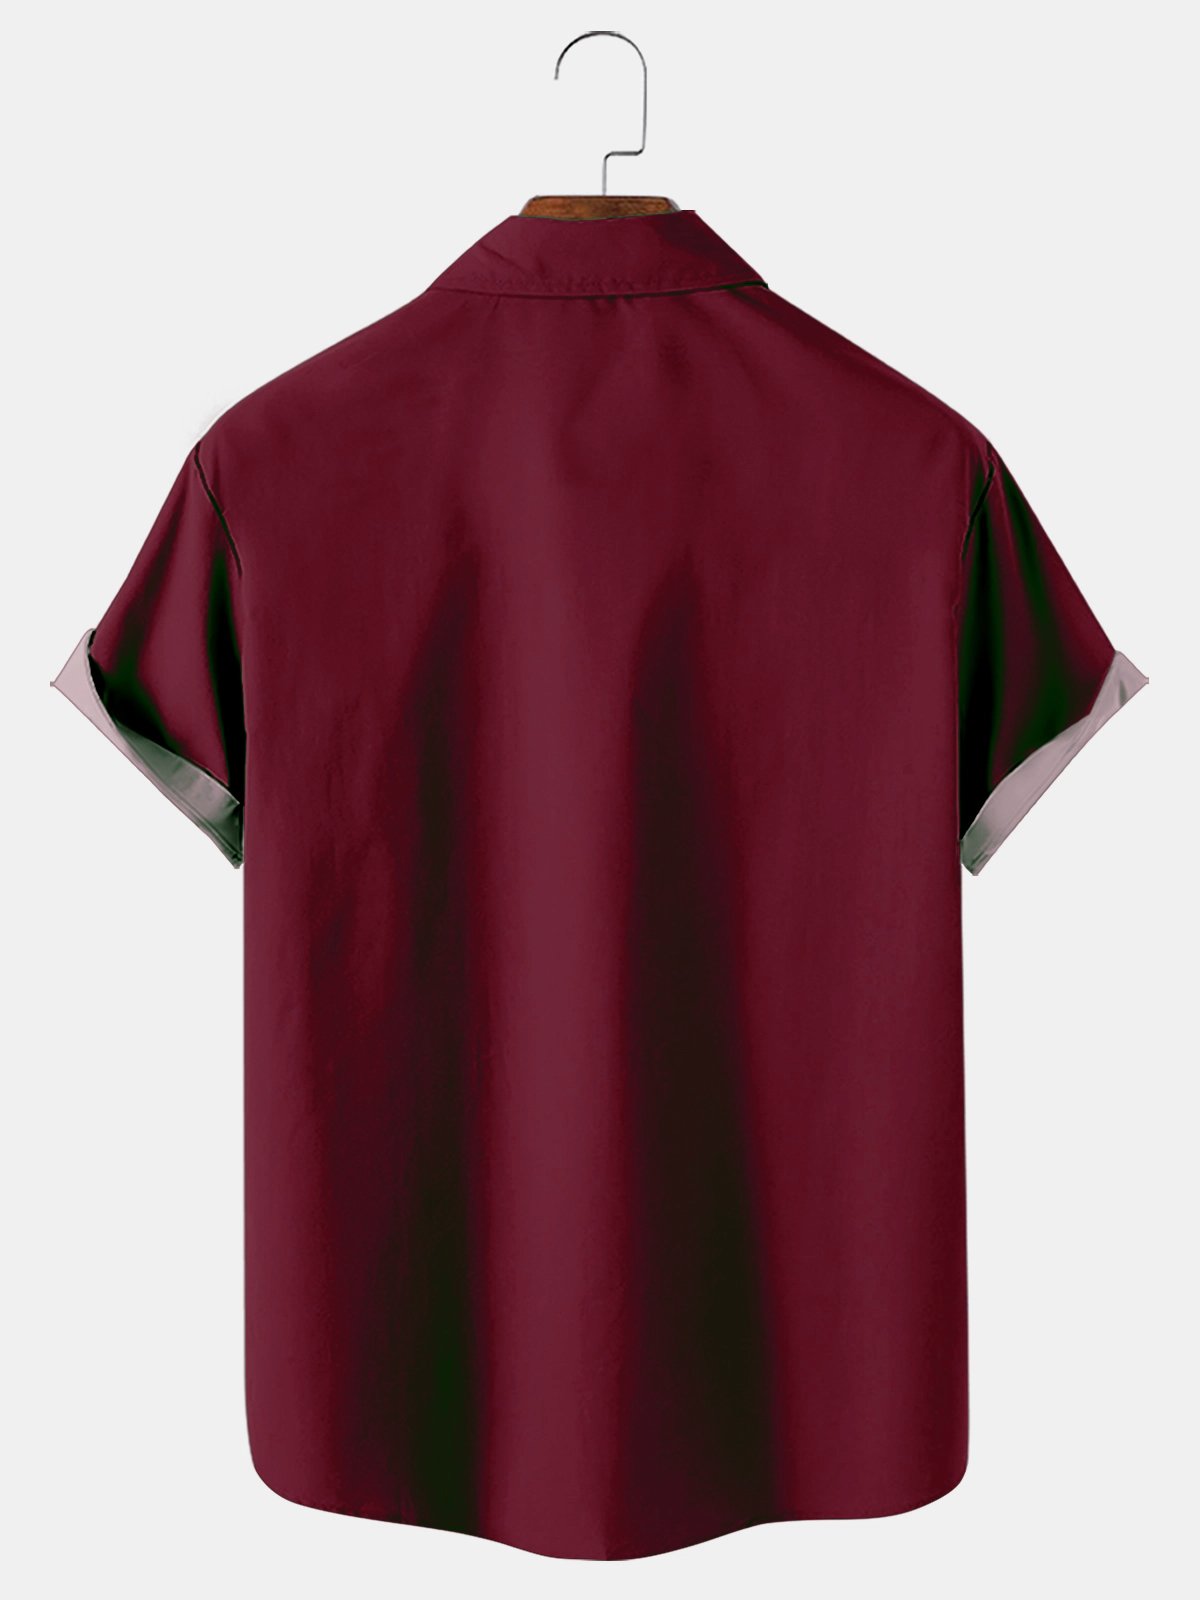 Royaura Red Panel Vintage Car Print Breast Pocket Shirt Plus Size Shirt